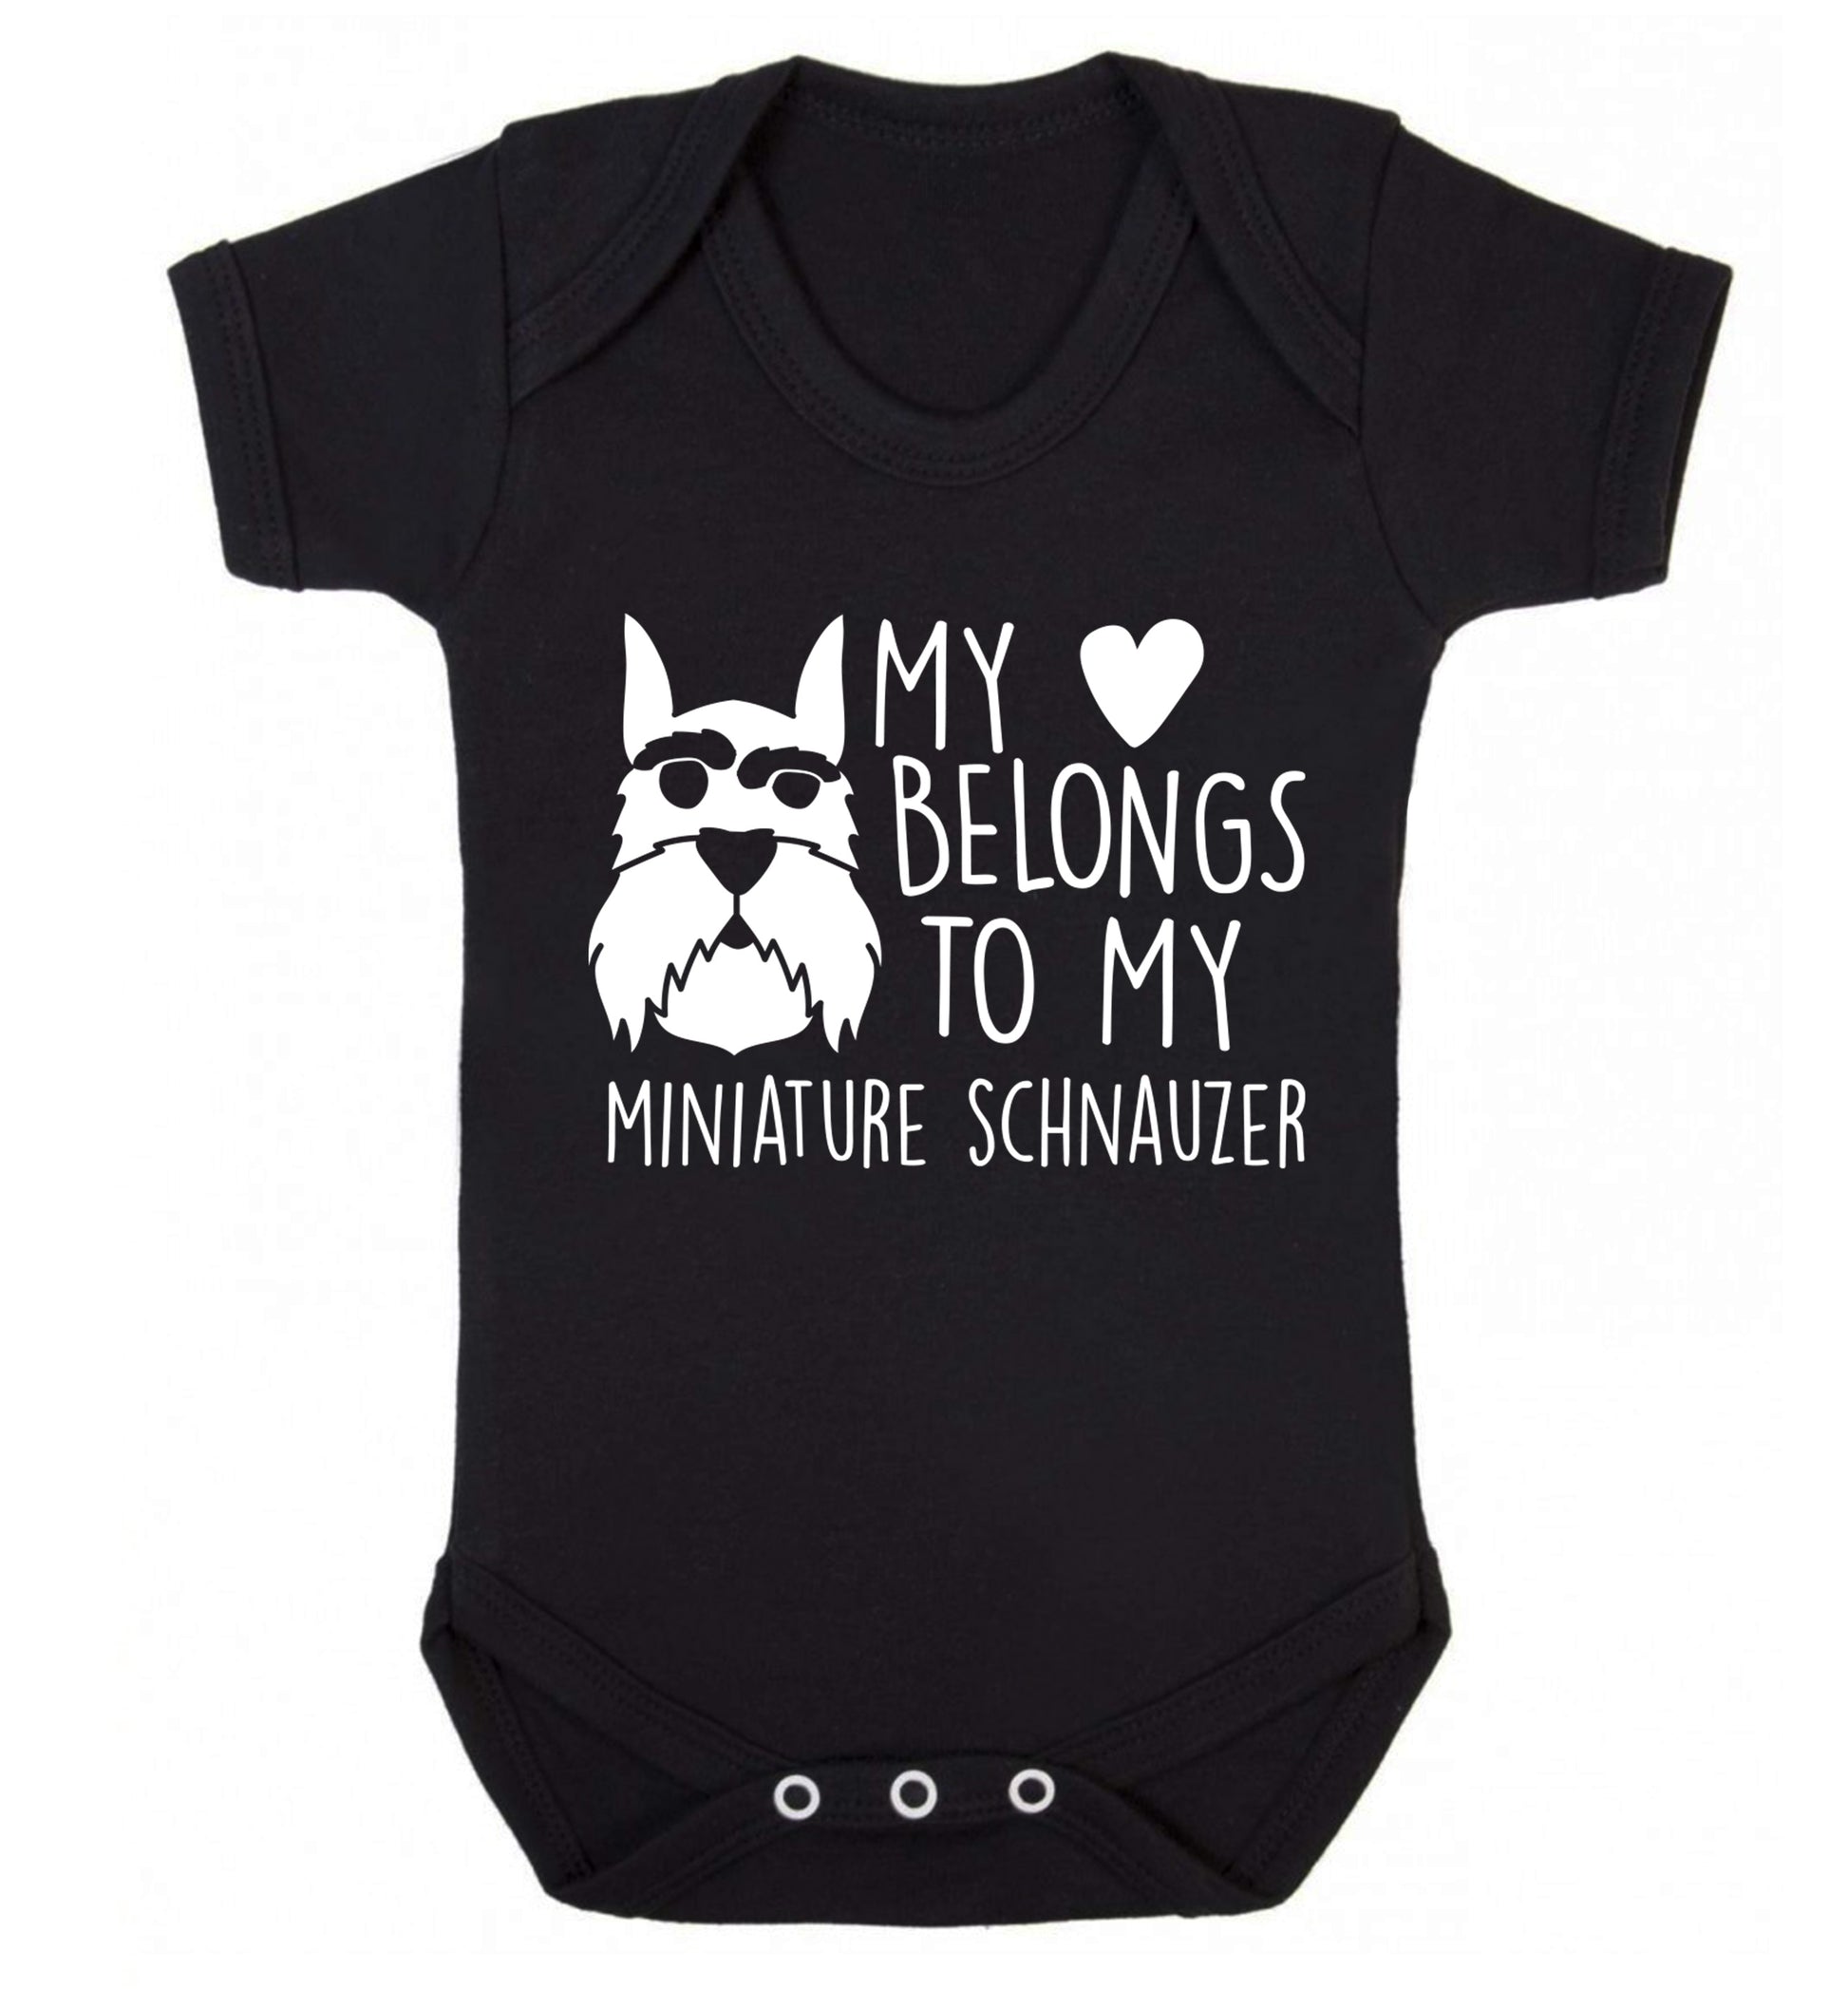 My heart belongs to my miniature schnauzer Baby Vest black 18-24 months